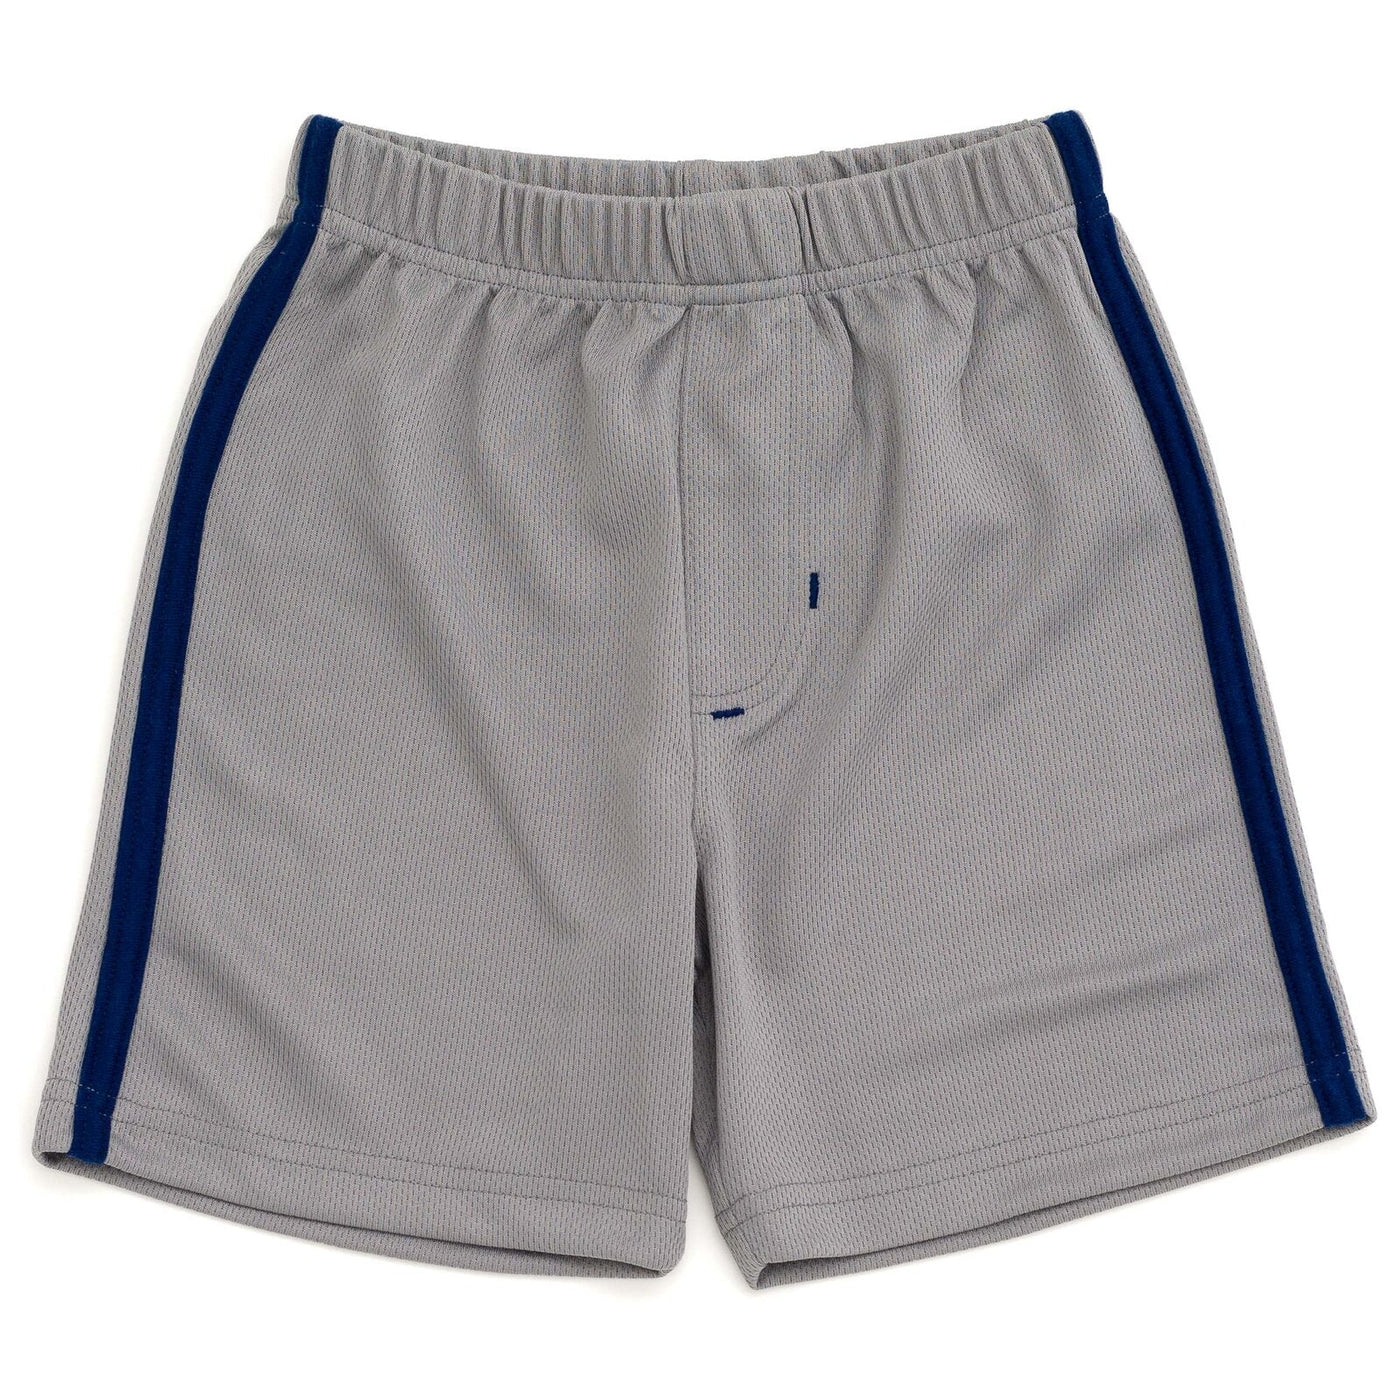 Bluey T-Shirt and Athletic Mesh Shorts Outfit Set - imagikids